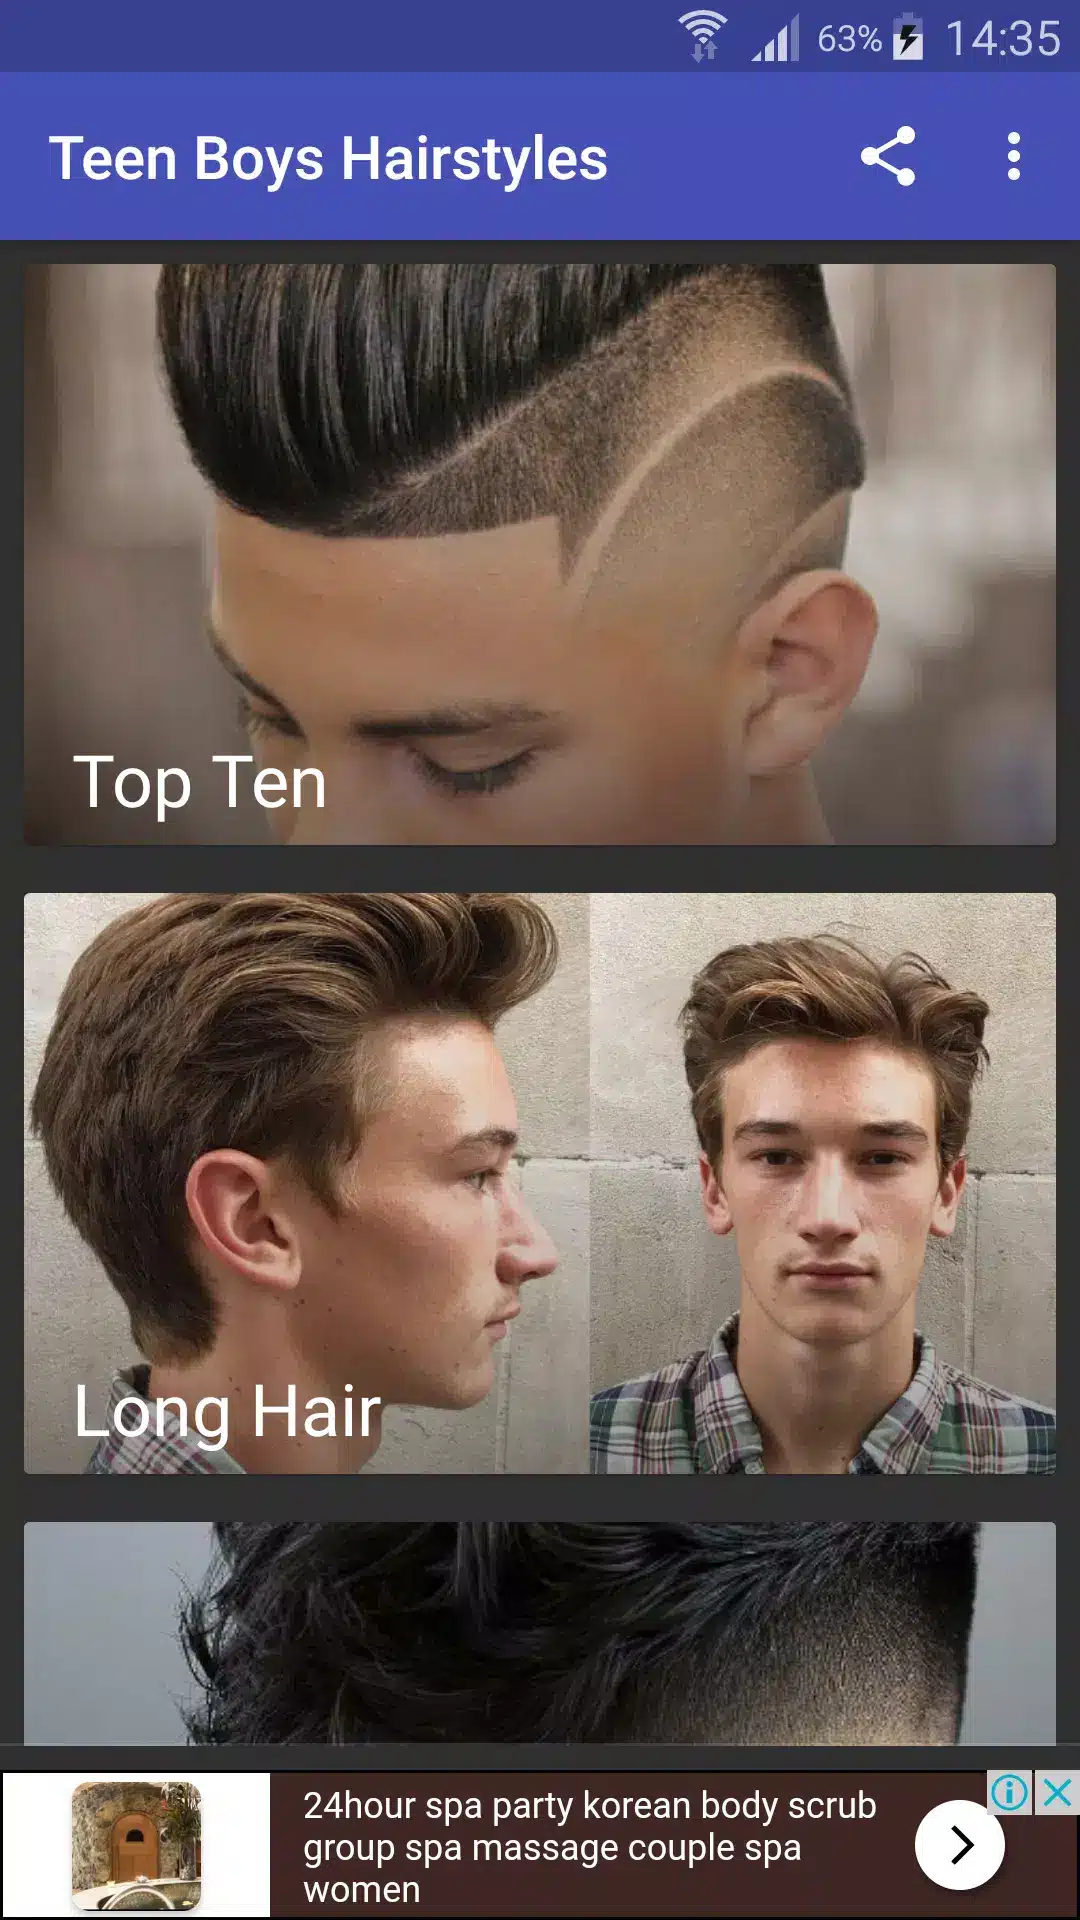 Teen Boys Hairstyles Image 1